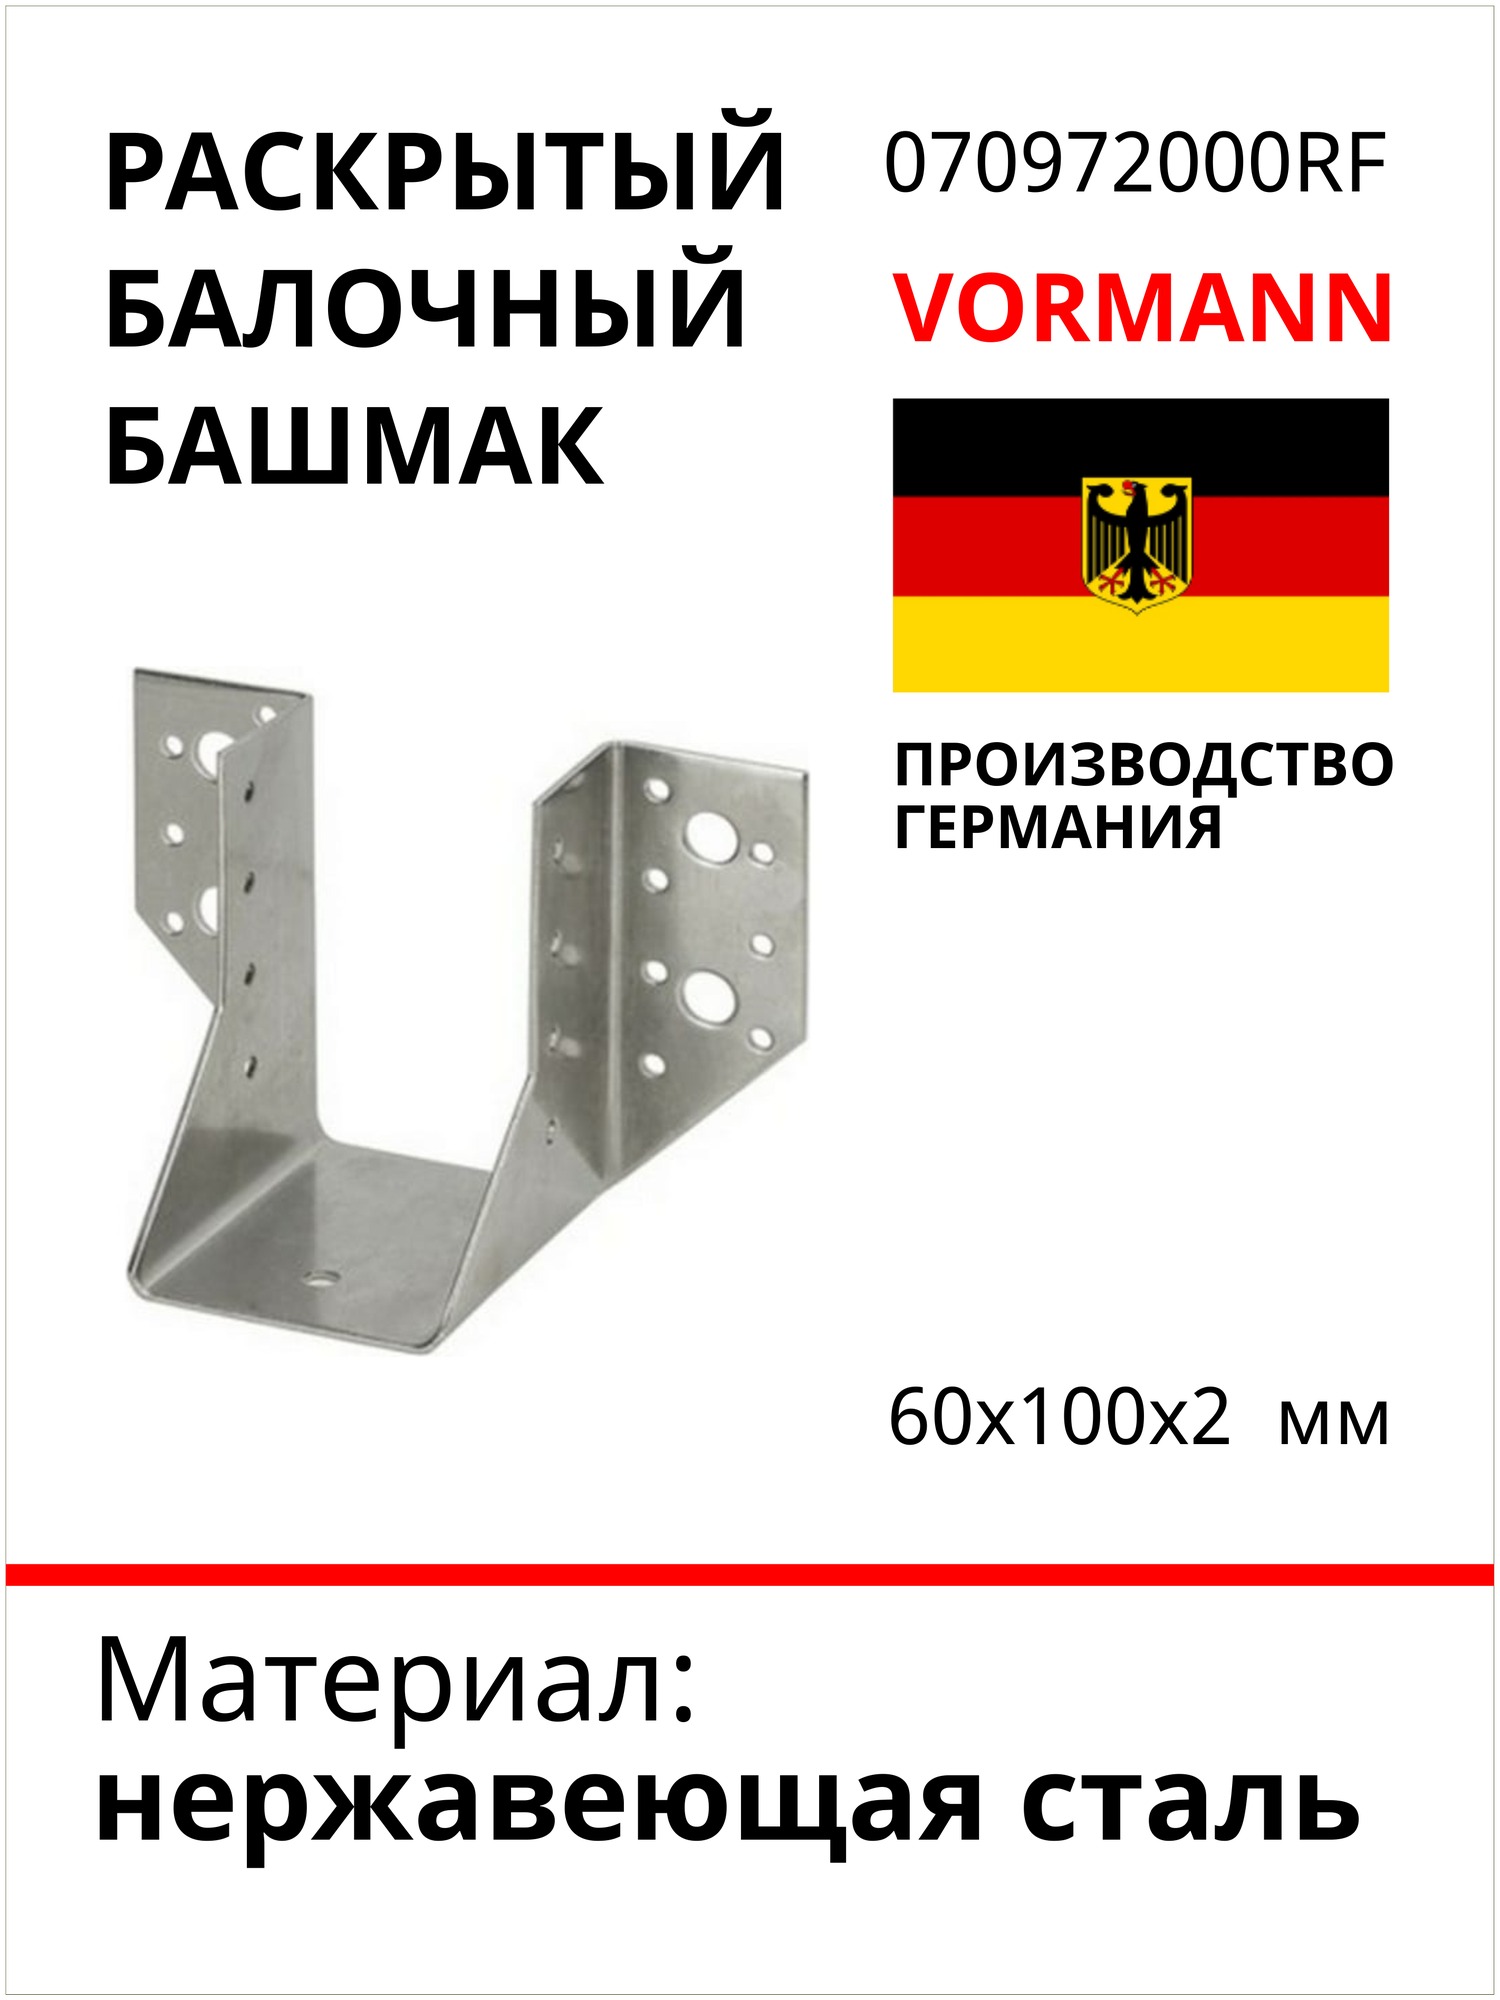 Раскрытый балочный башмак VORMANN 60x100x2 мм, нержавеющая сталь 070972000RF